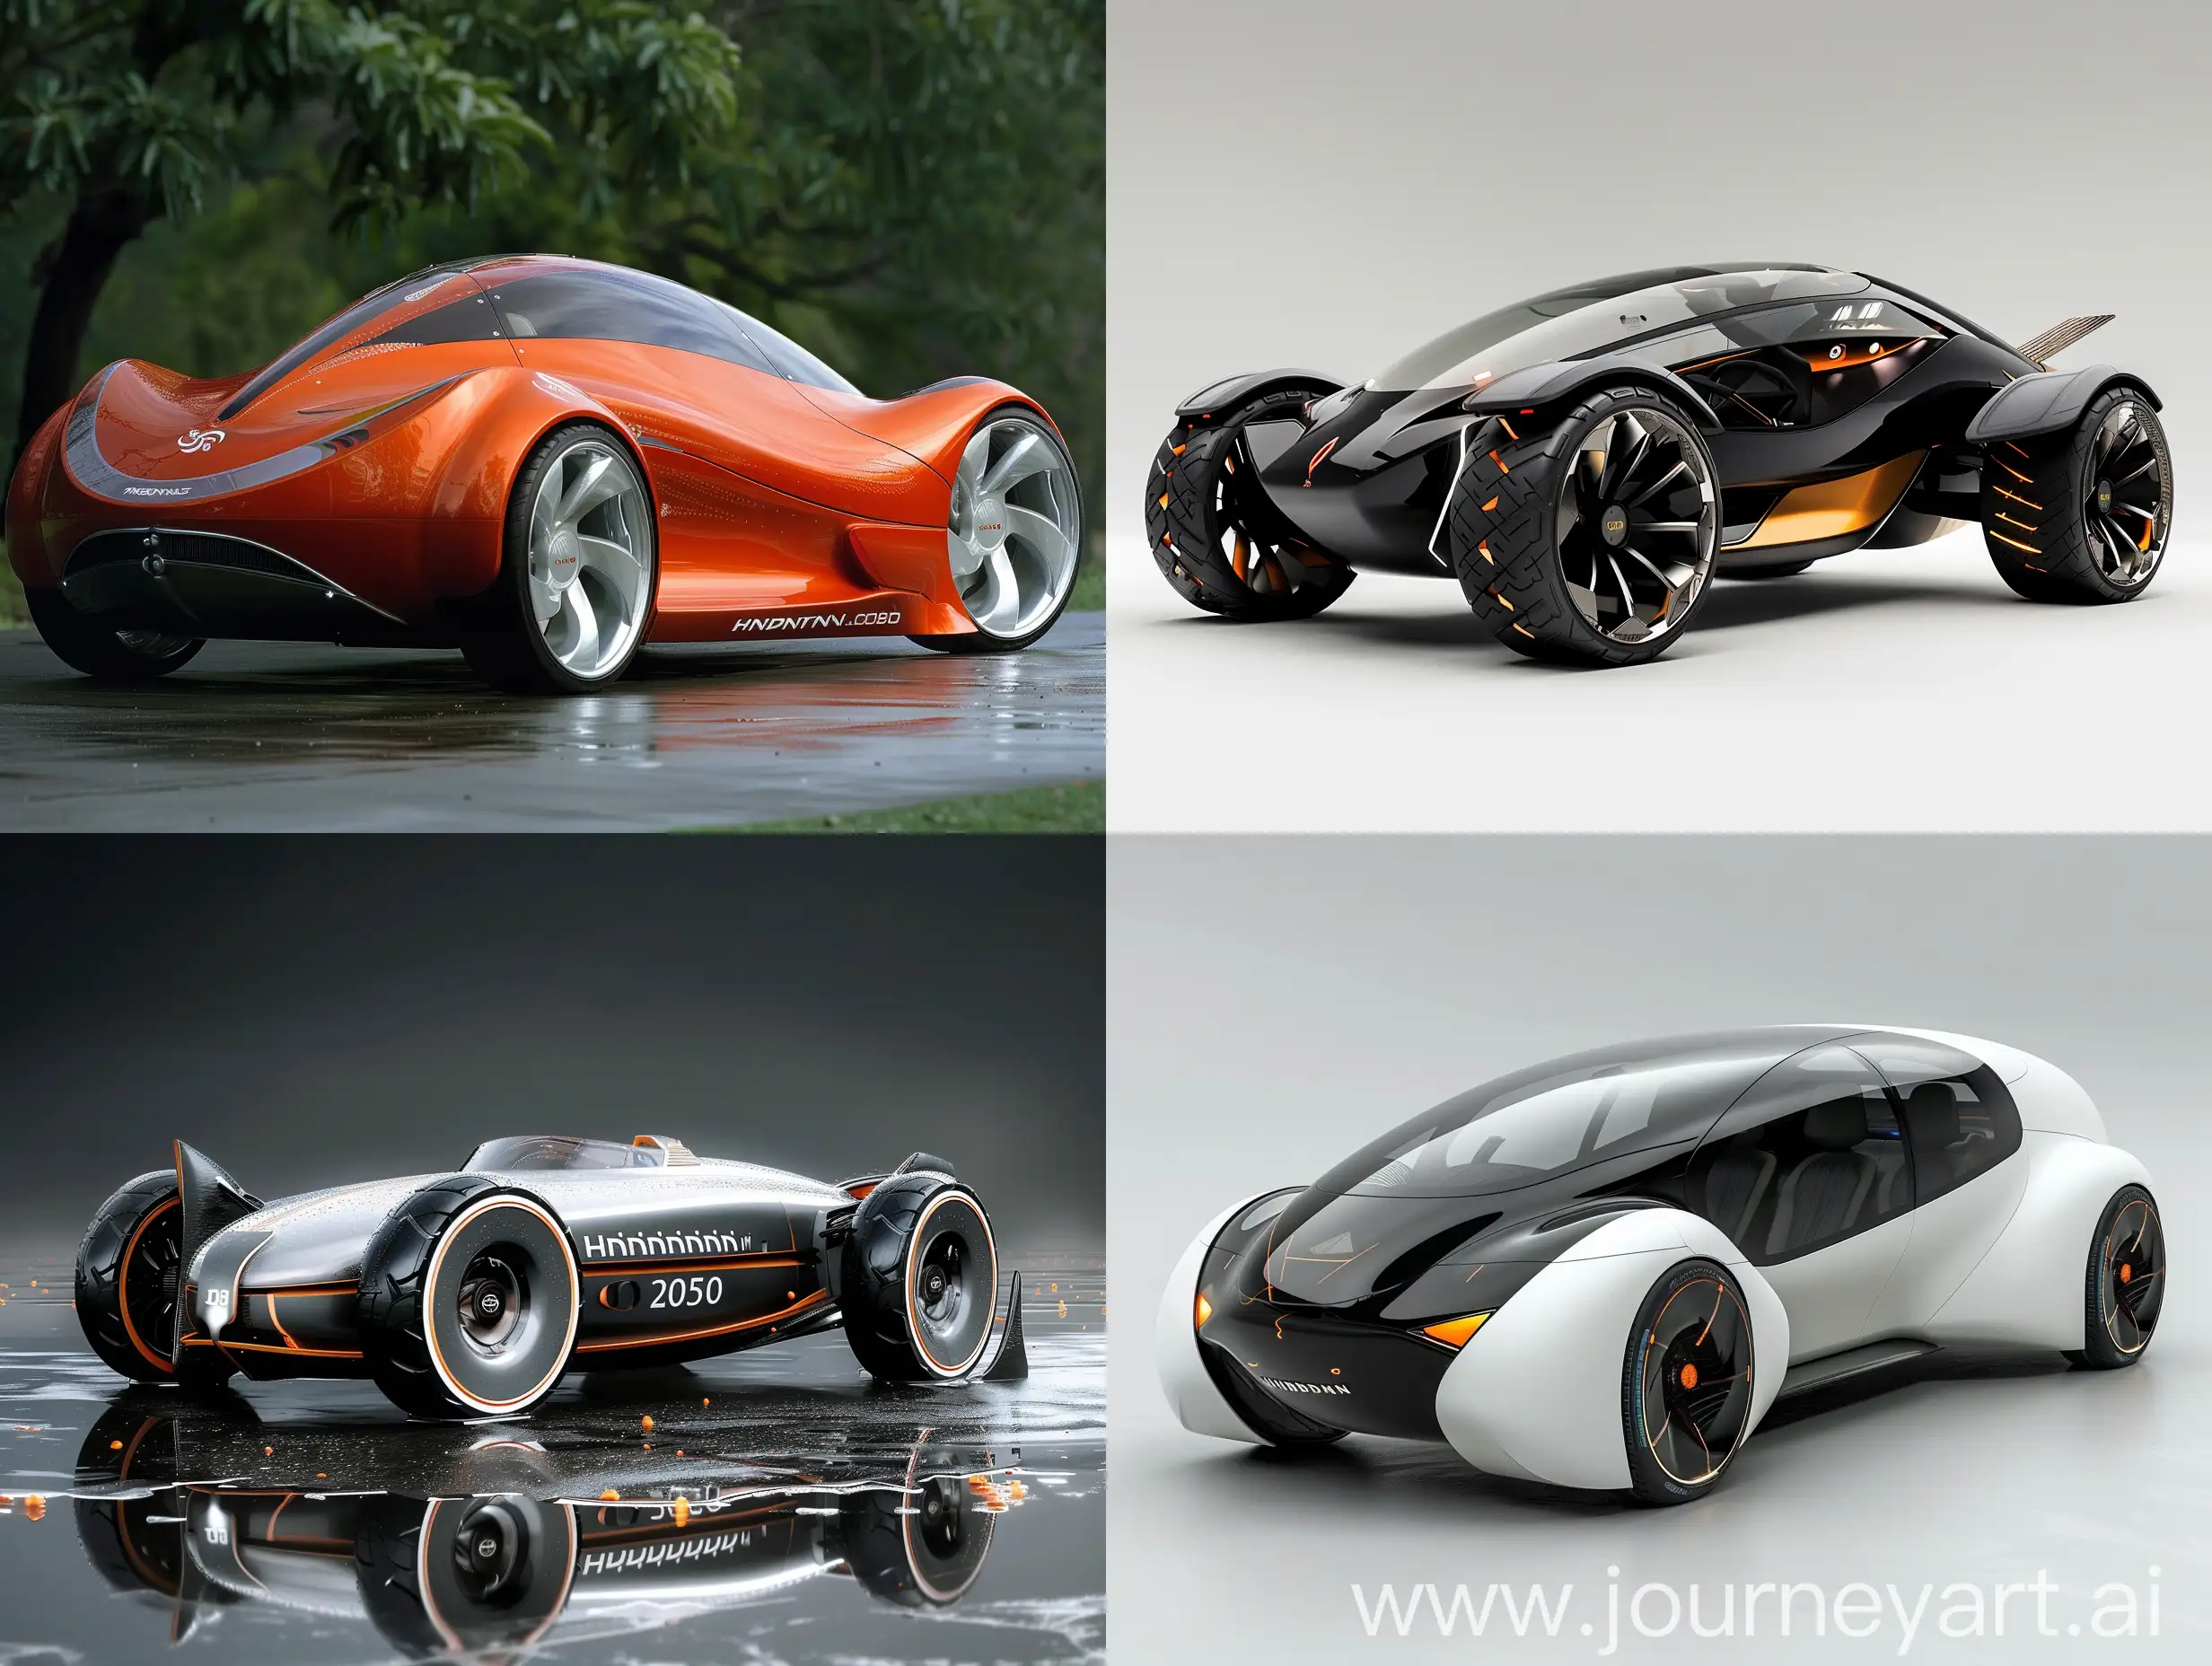 Futuristic-Redesigned-Hindustan-Motors-Contessa-2050-in-Vibrant-Red